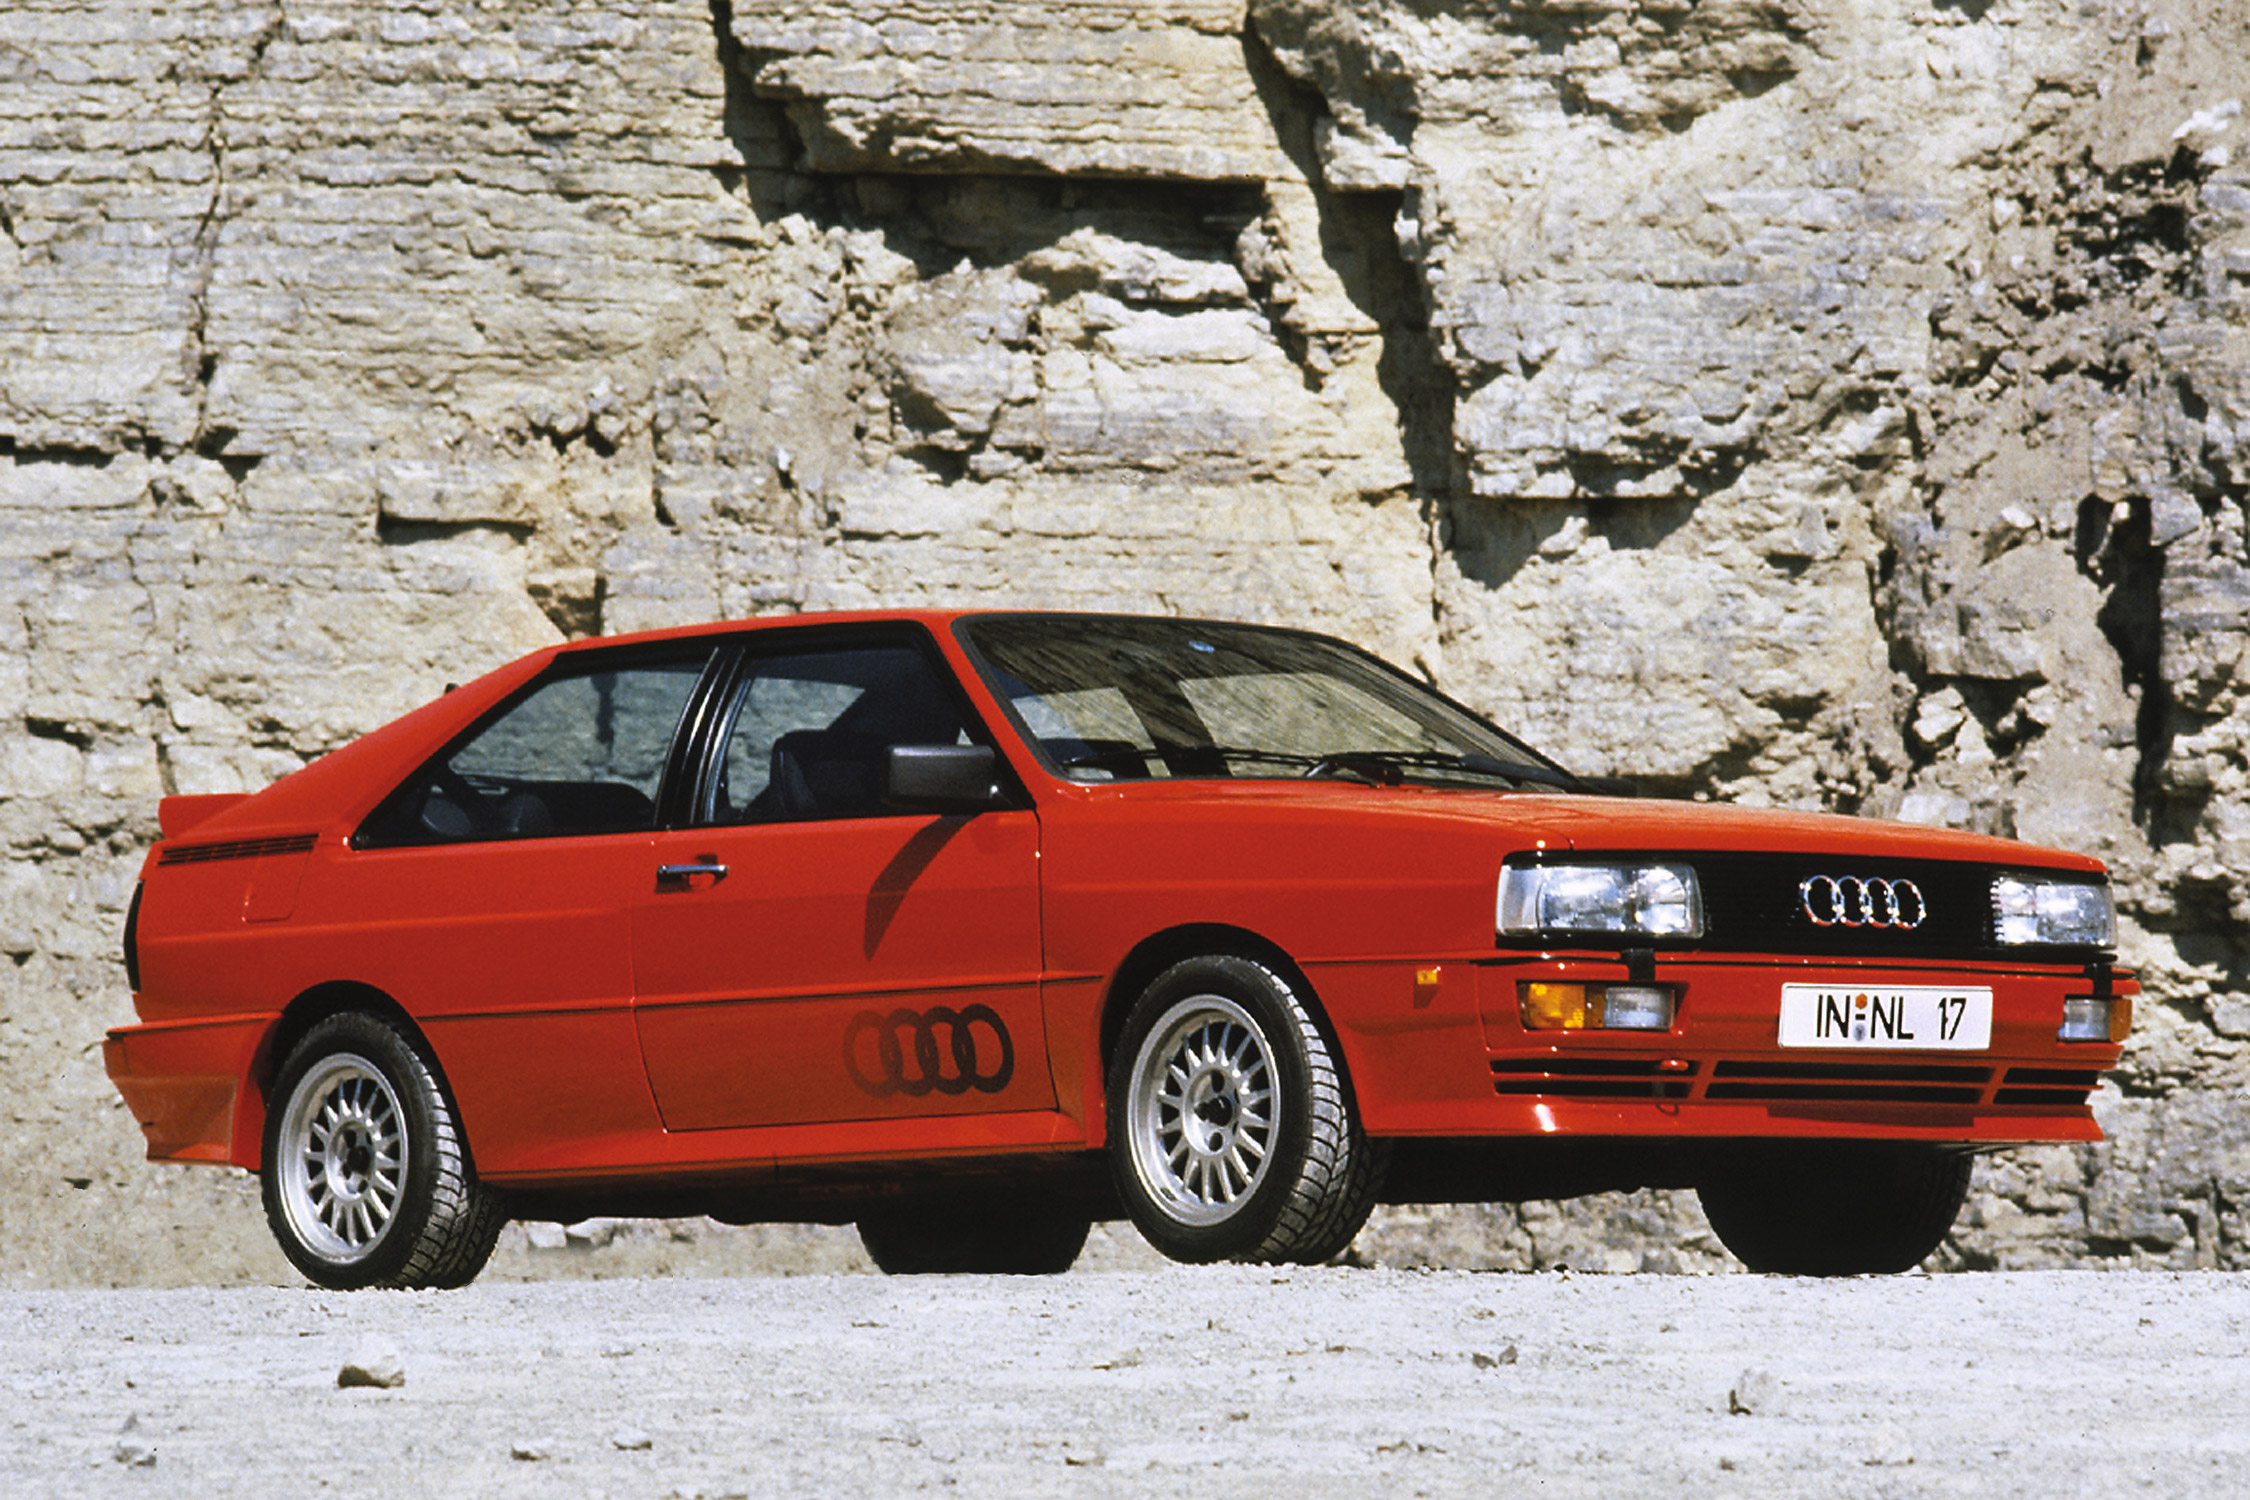 Audi Quattro (1980) - Les voitures qui ont marqué les années 80 - diaporama photo Motorlegend.com